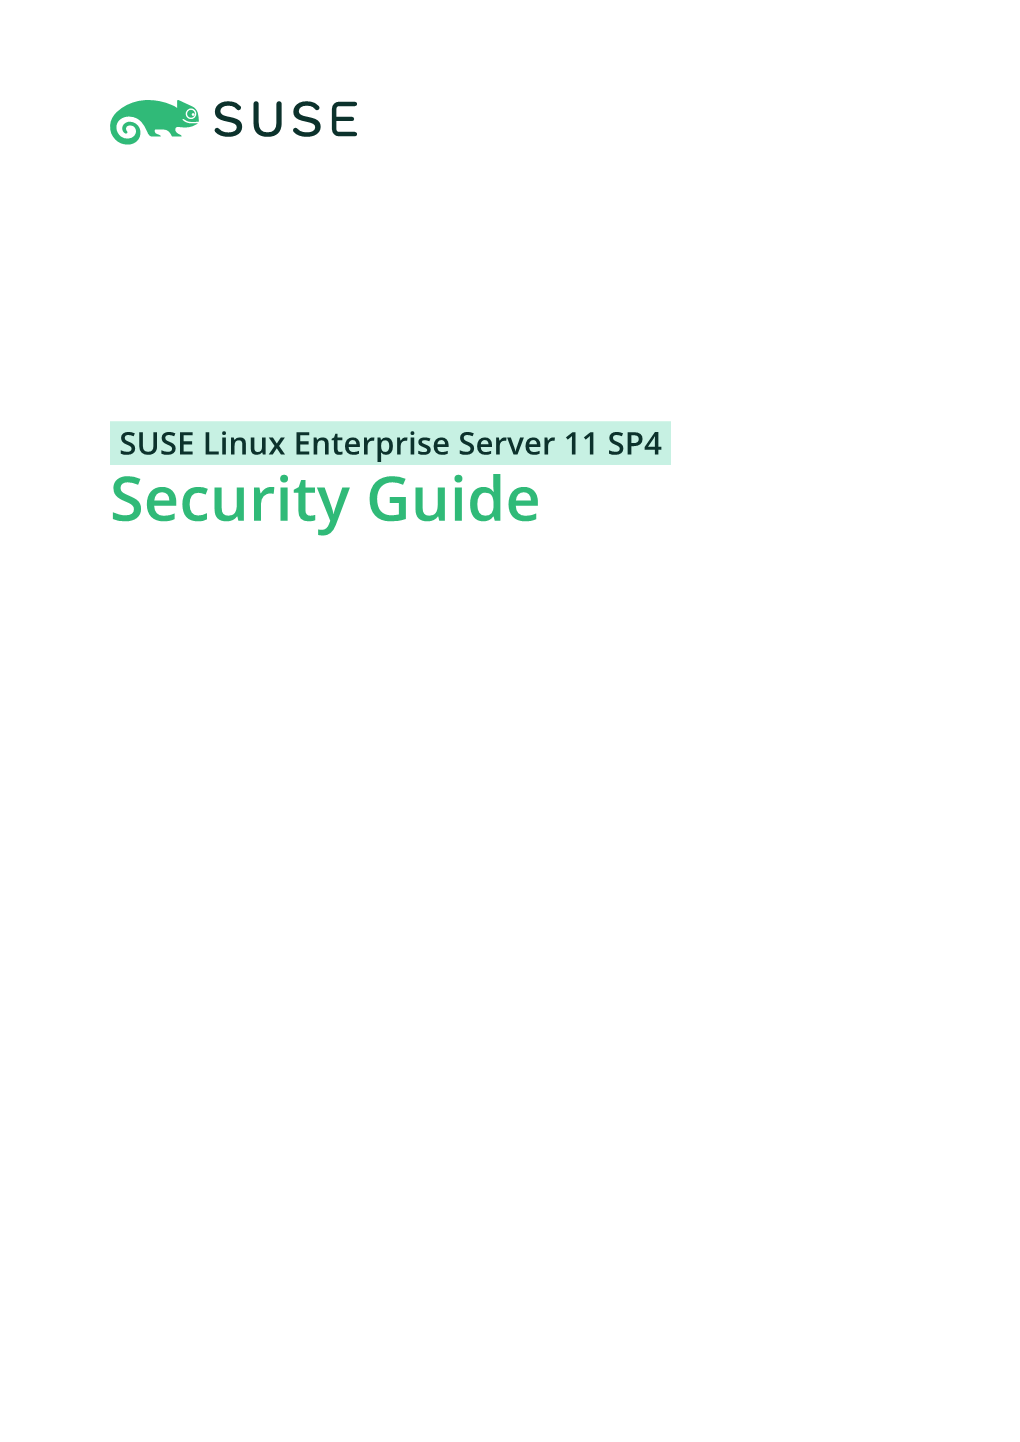 SUSE Linux Enterprise Server 11 SP4 Security Guide Security Guide SUSE Linux Enterprise Server 11 SP4